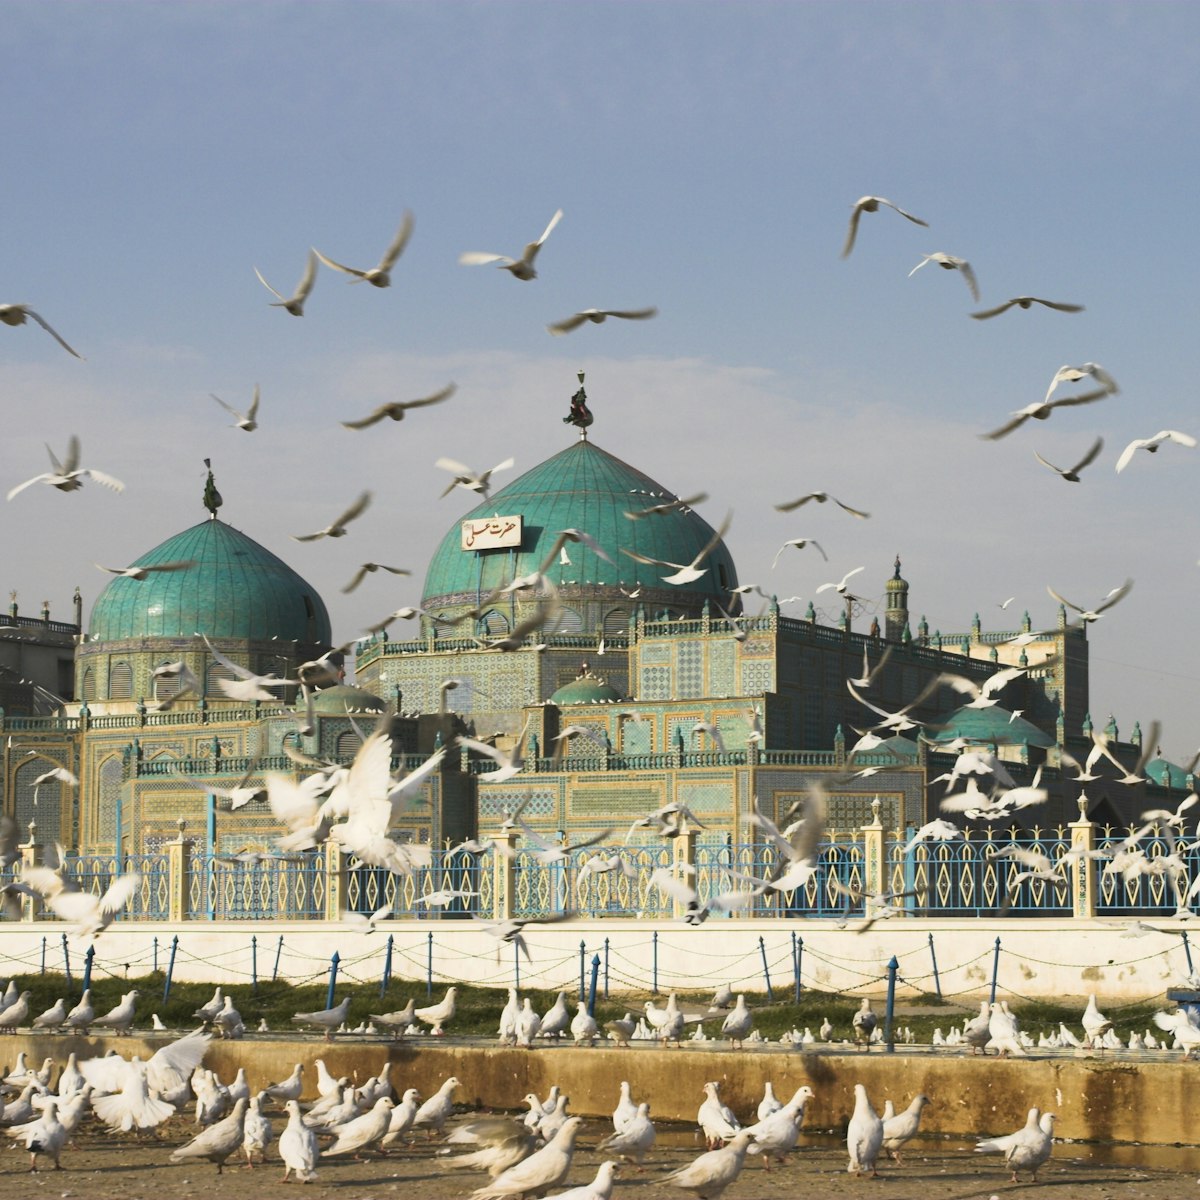 The famous white pigeons, Shrine of Hazrat Ali, Mazar-I-Sharif, Balkh province, Afghanistan, Asia